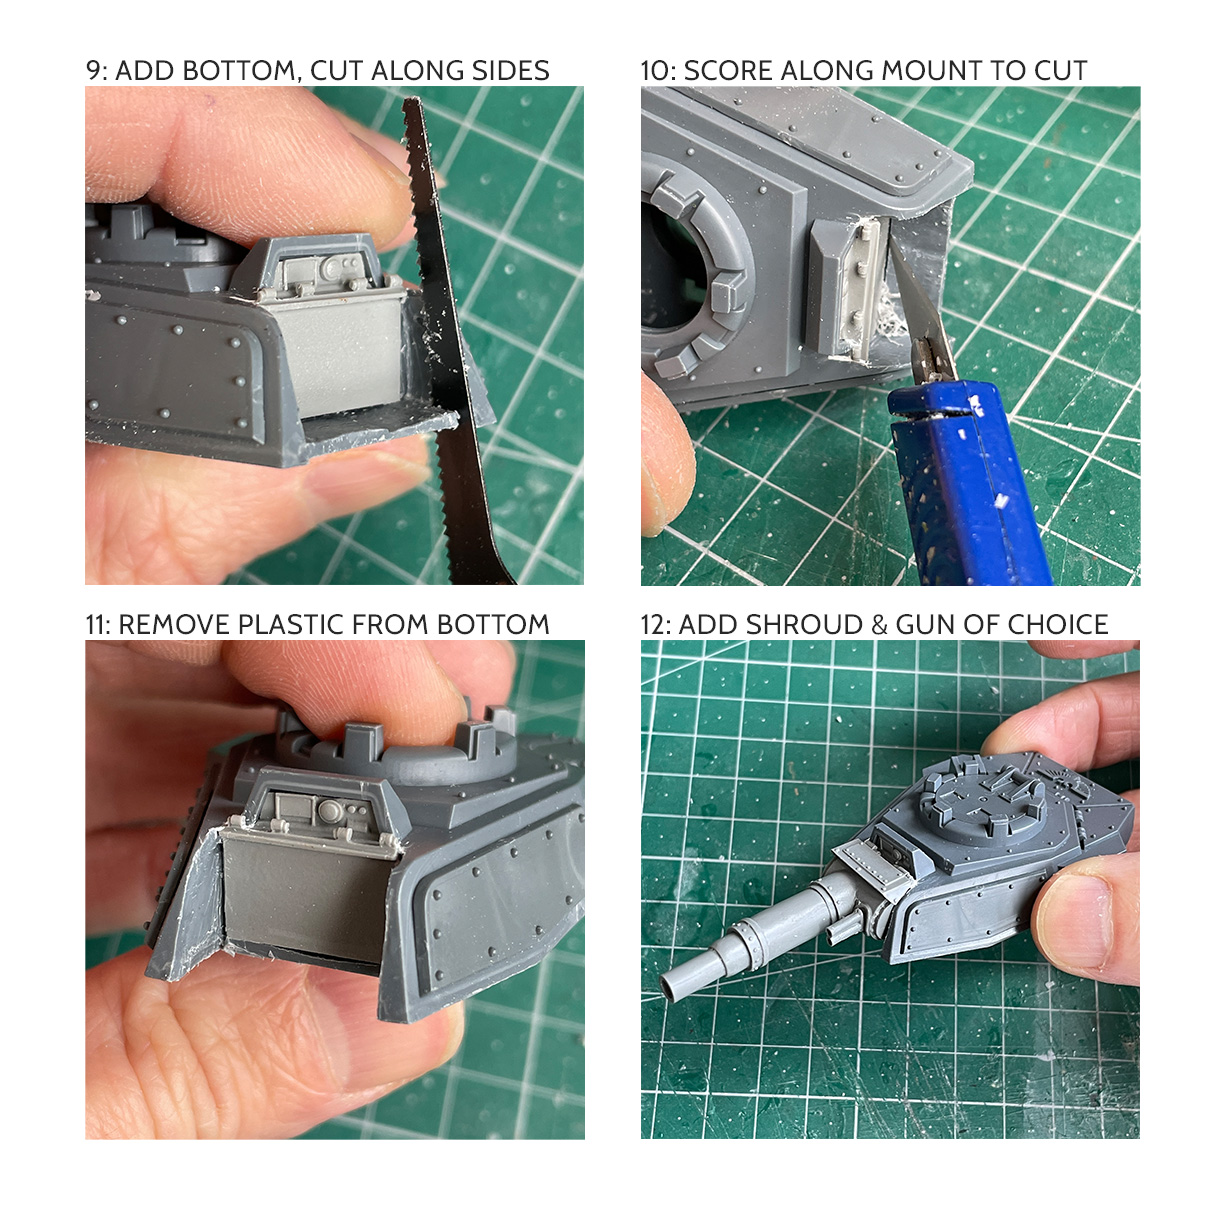 Turret Conversion Kit instructions: Part 3